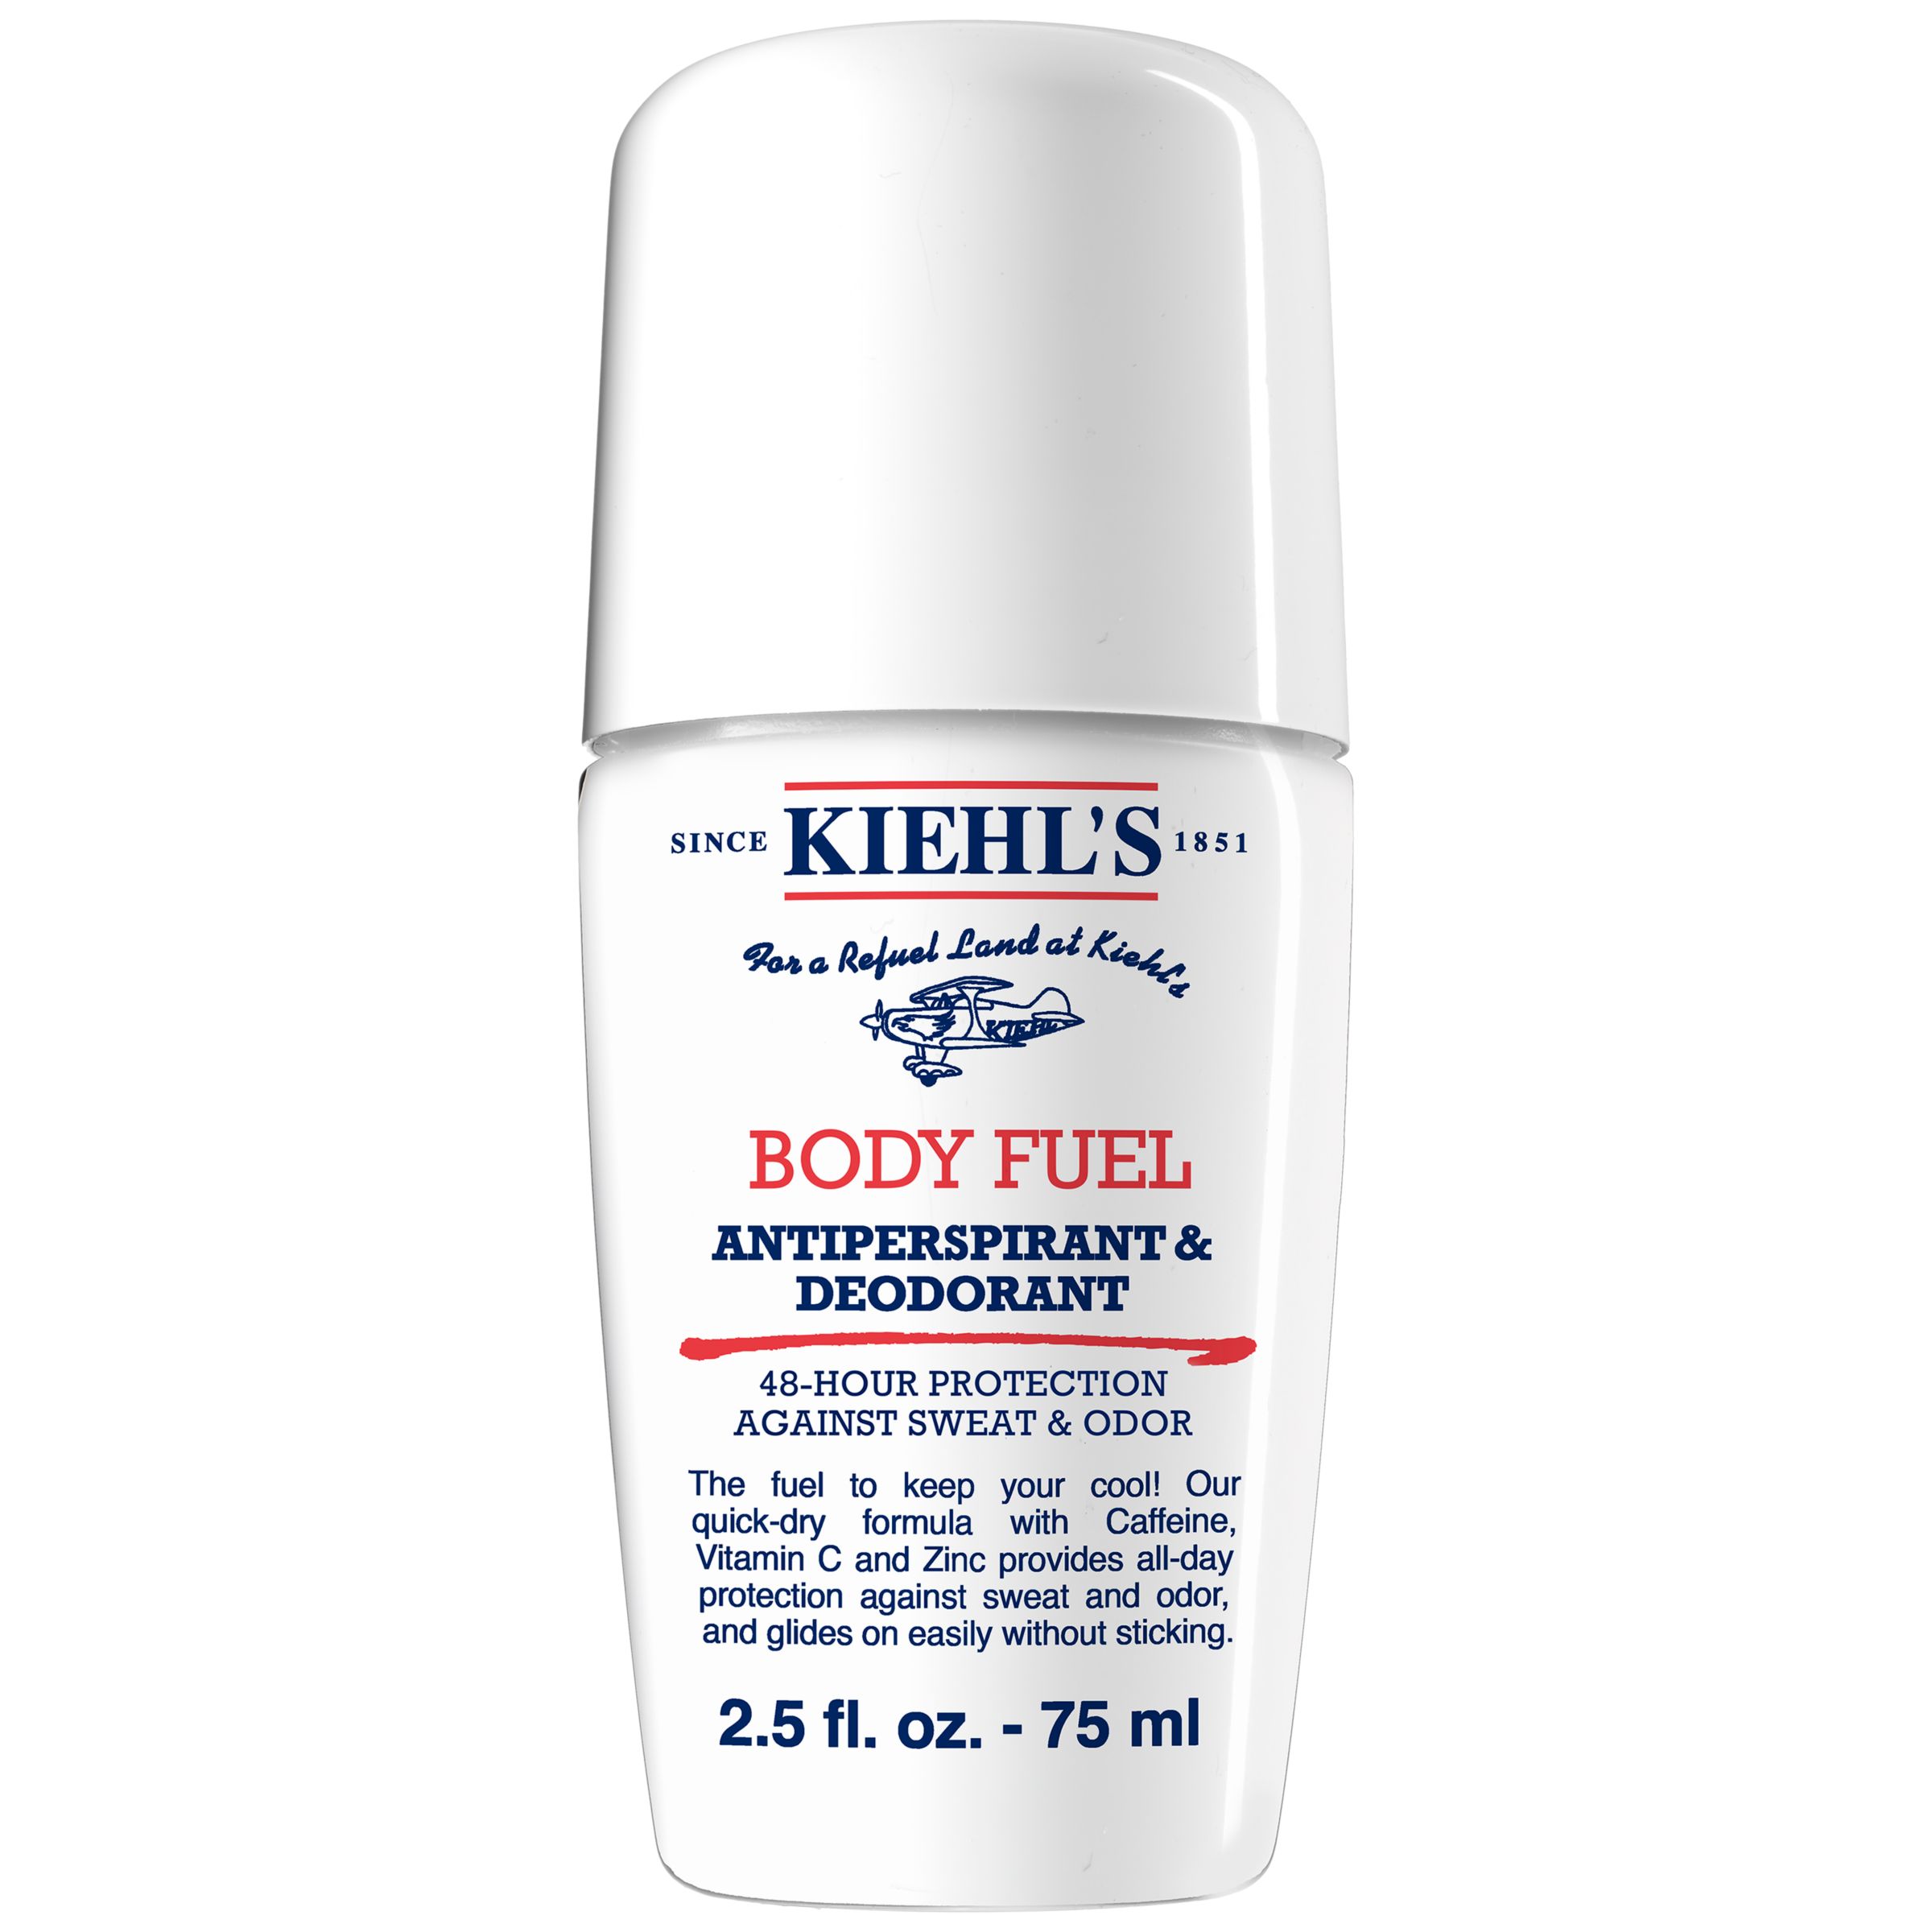 Kiehl's Body Fuel Antiperspirant & Deodorant For Men, 75ml 1